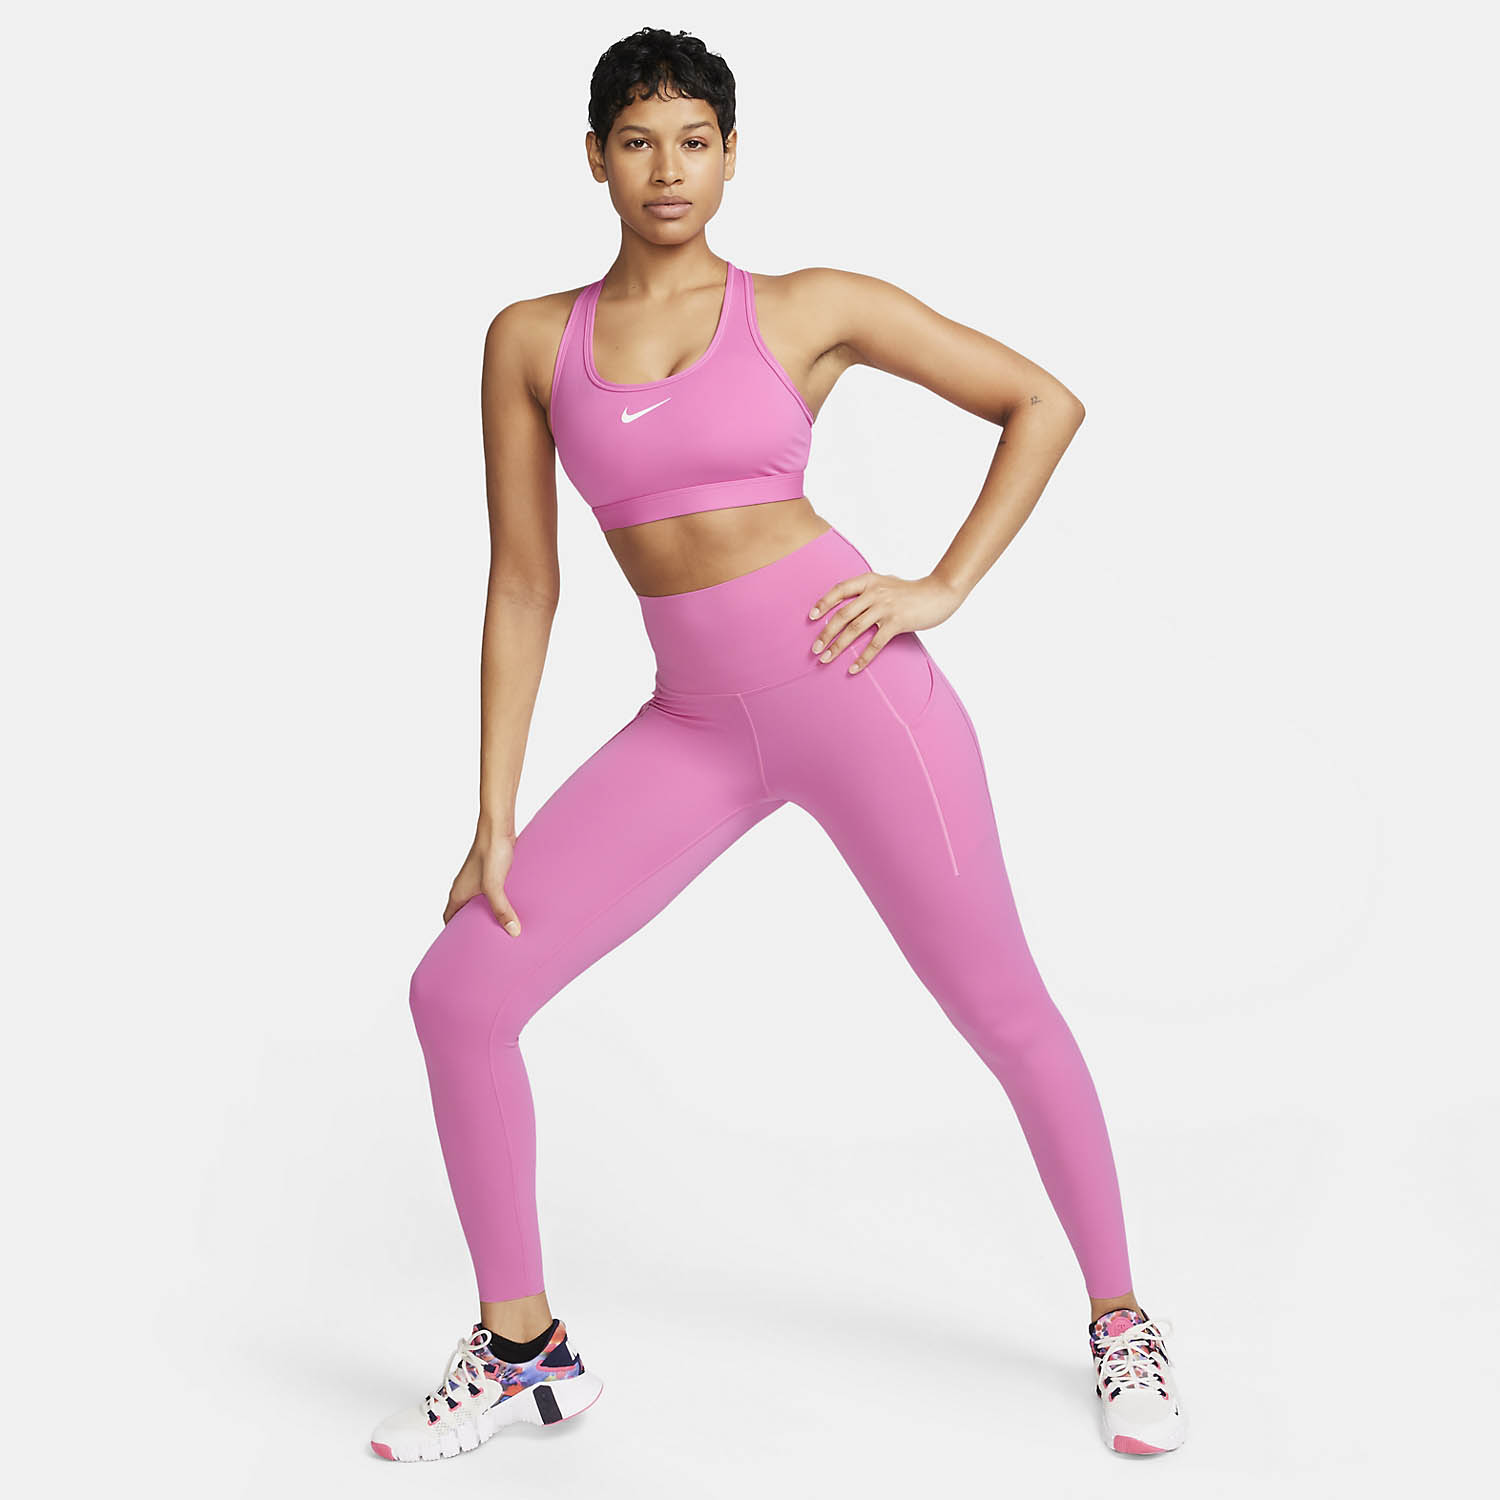 Nike Swoosh Women's Training Sports Bra - Playful Pink/White